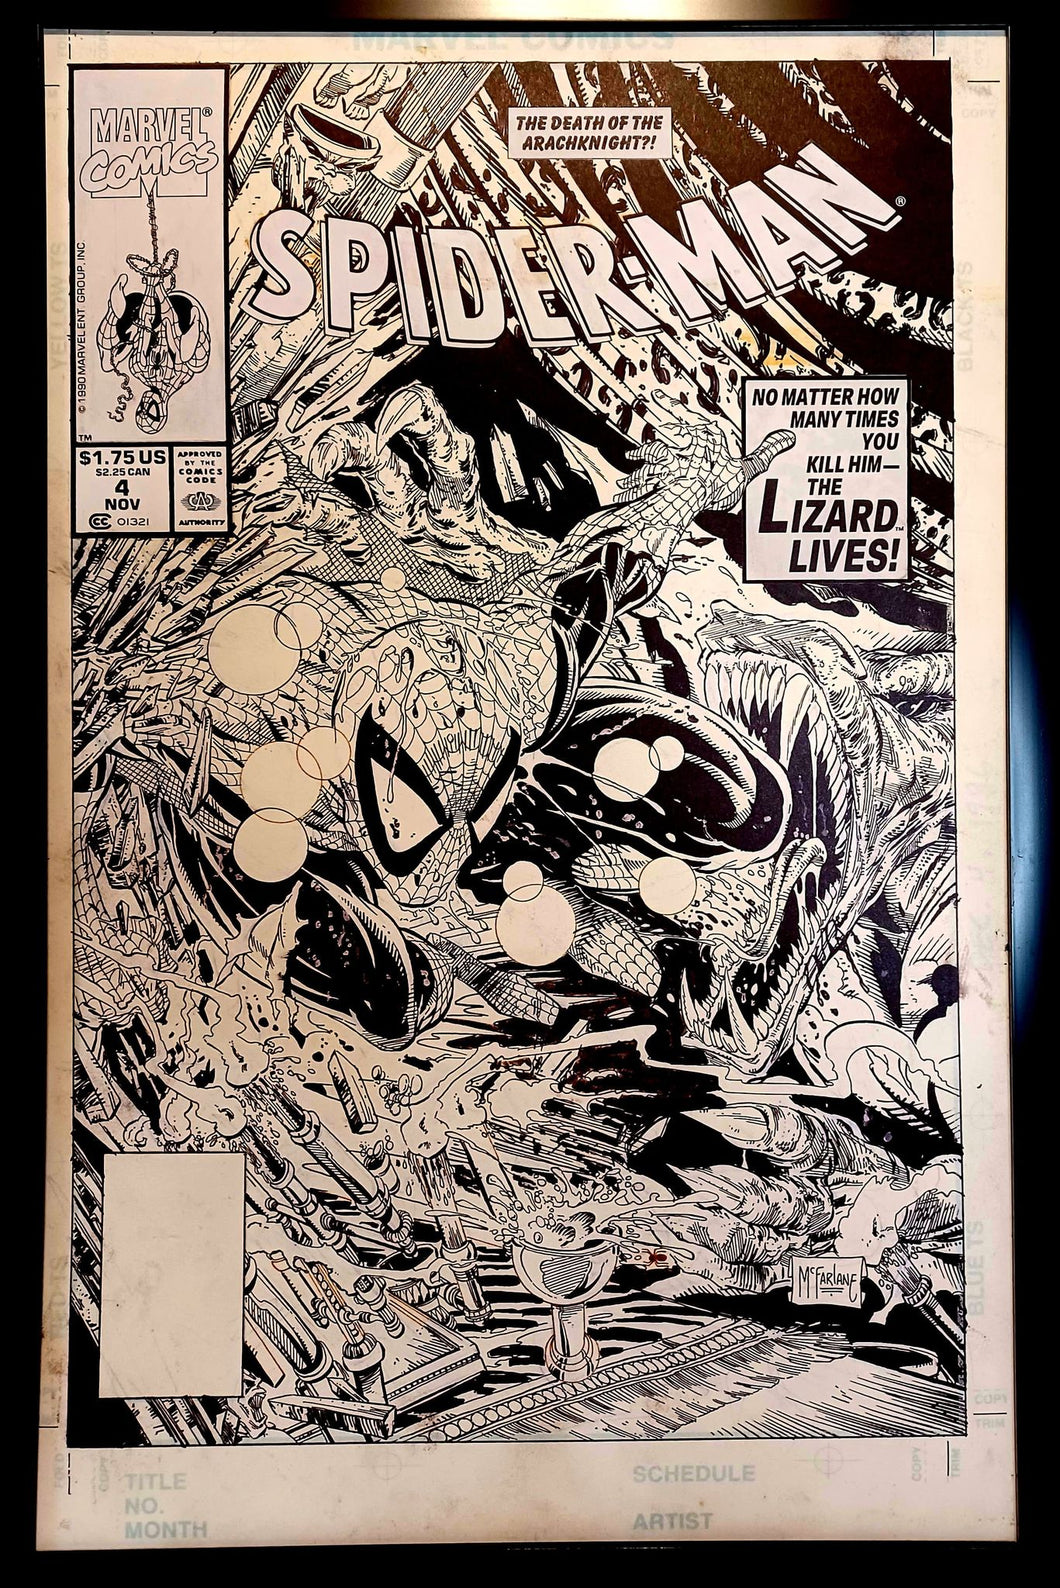 Spider-Man #4 by Todd McFarlane 11x17 FRAMED Original Art Print Comic Poster